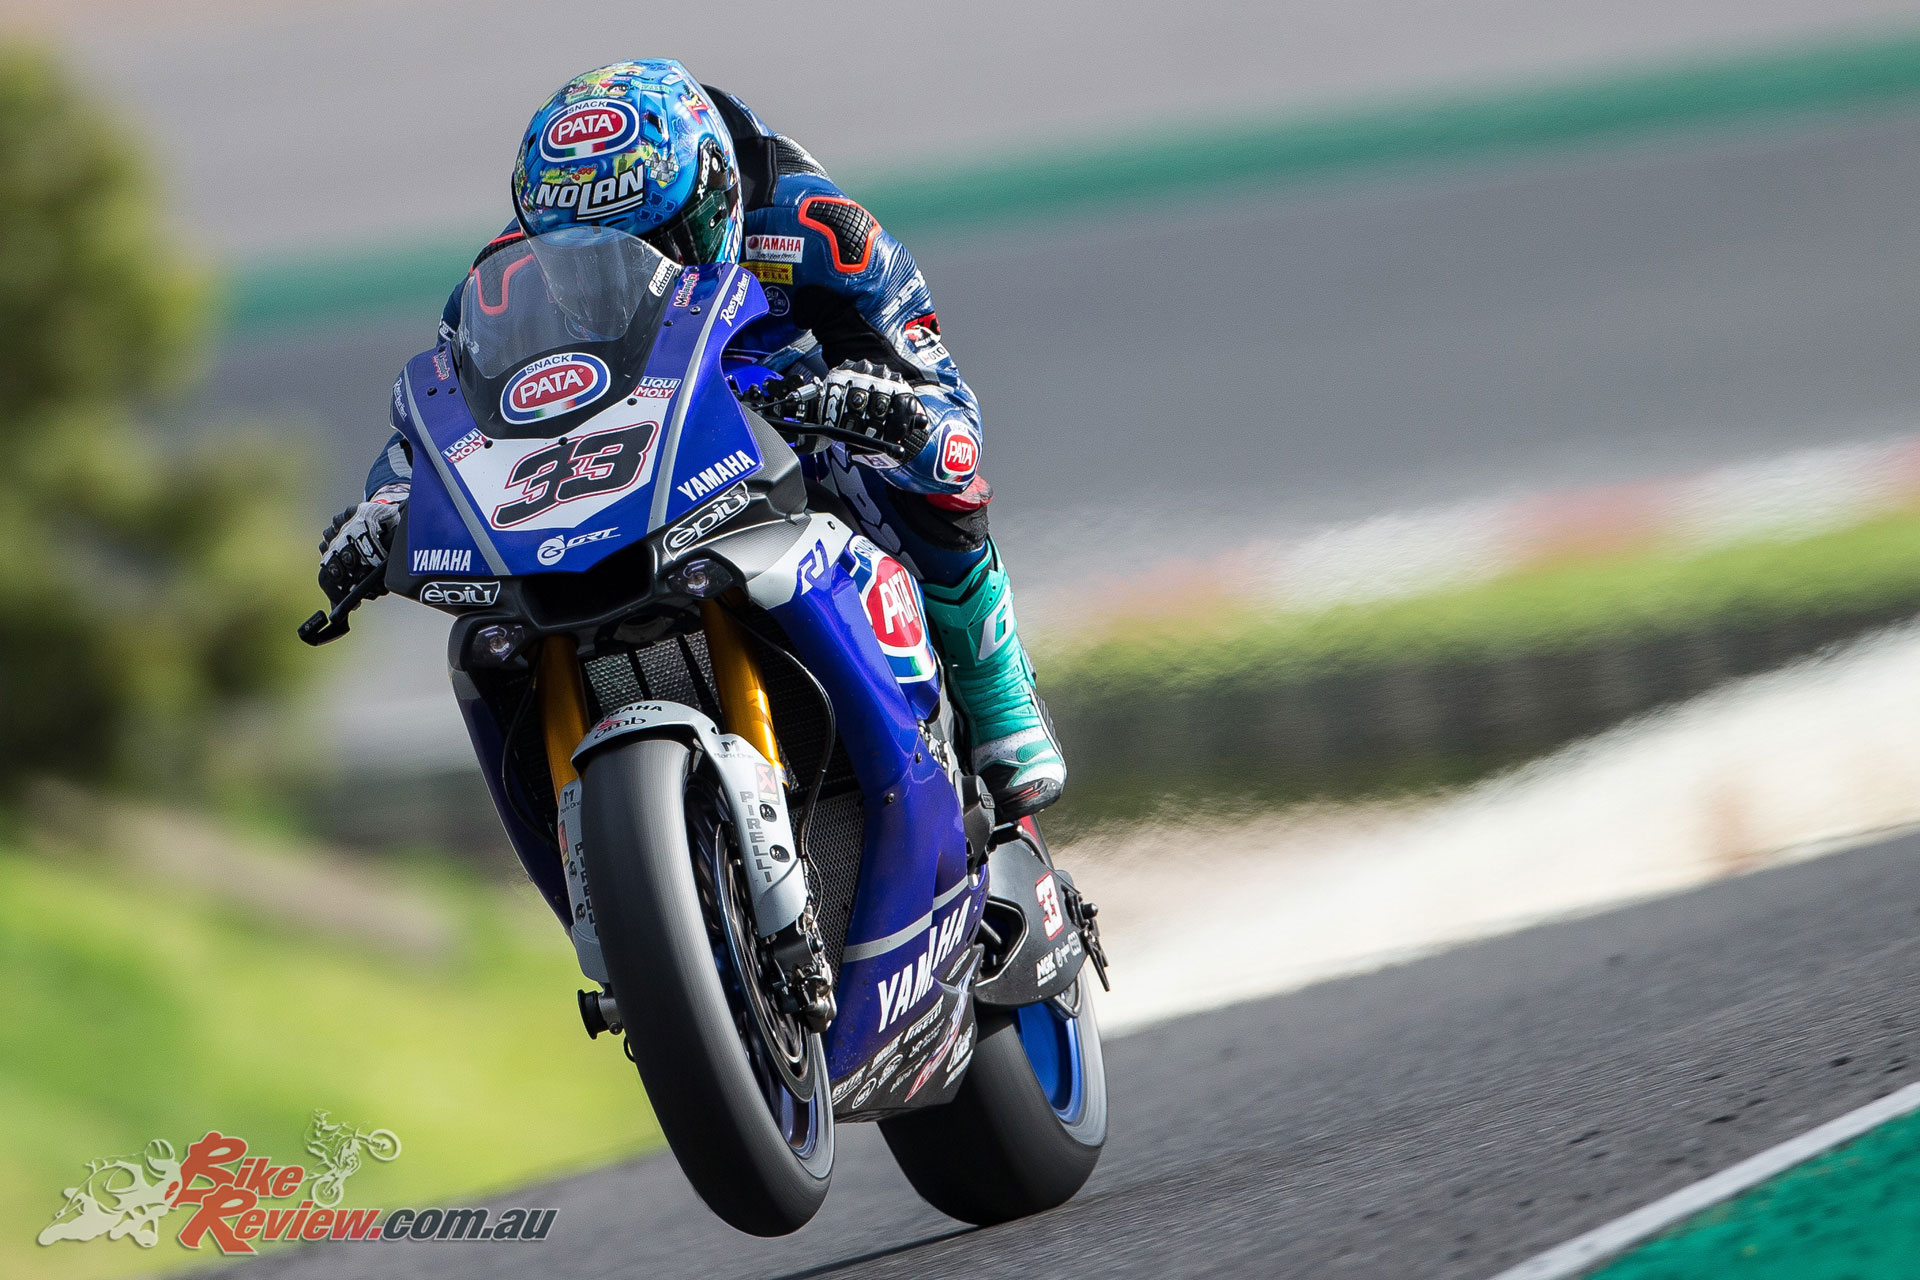 Marco Melandri will lead the GRT Yamaha Supported WorldSBK team